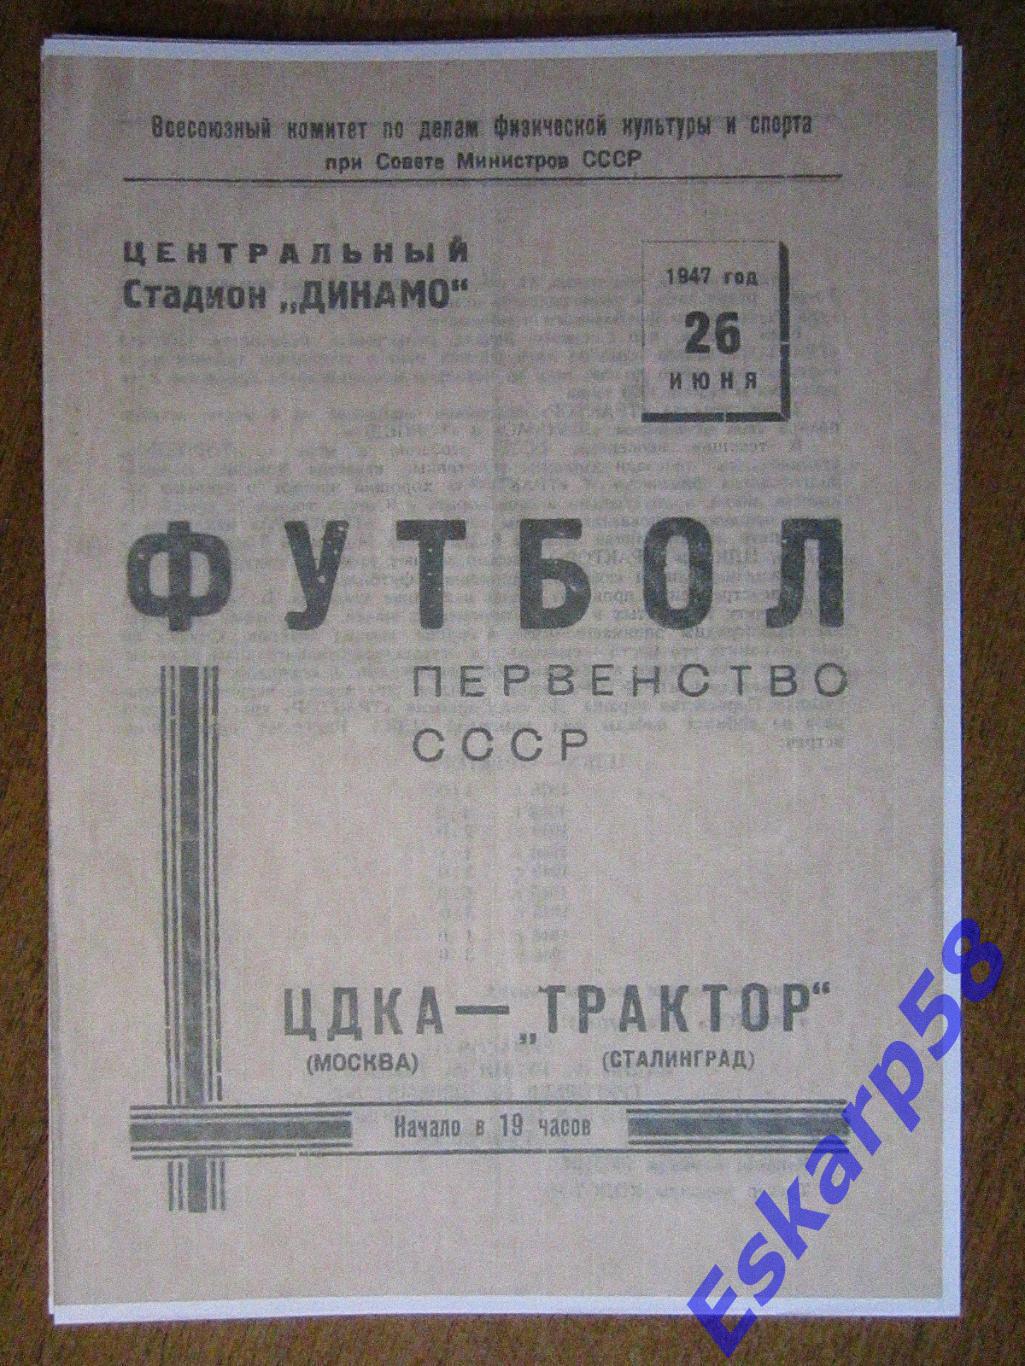 1947.ЦДКА-Трактор Сталинград.Копия.